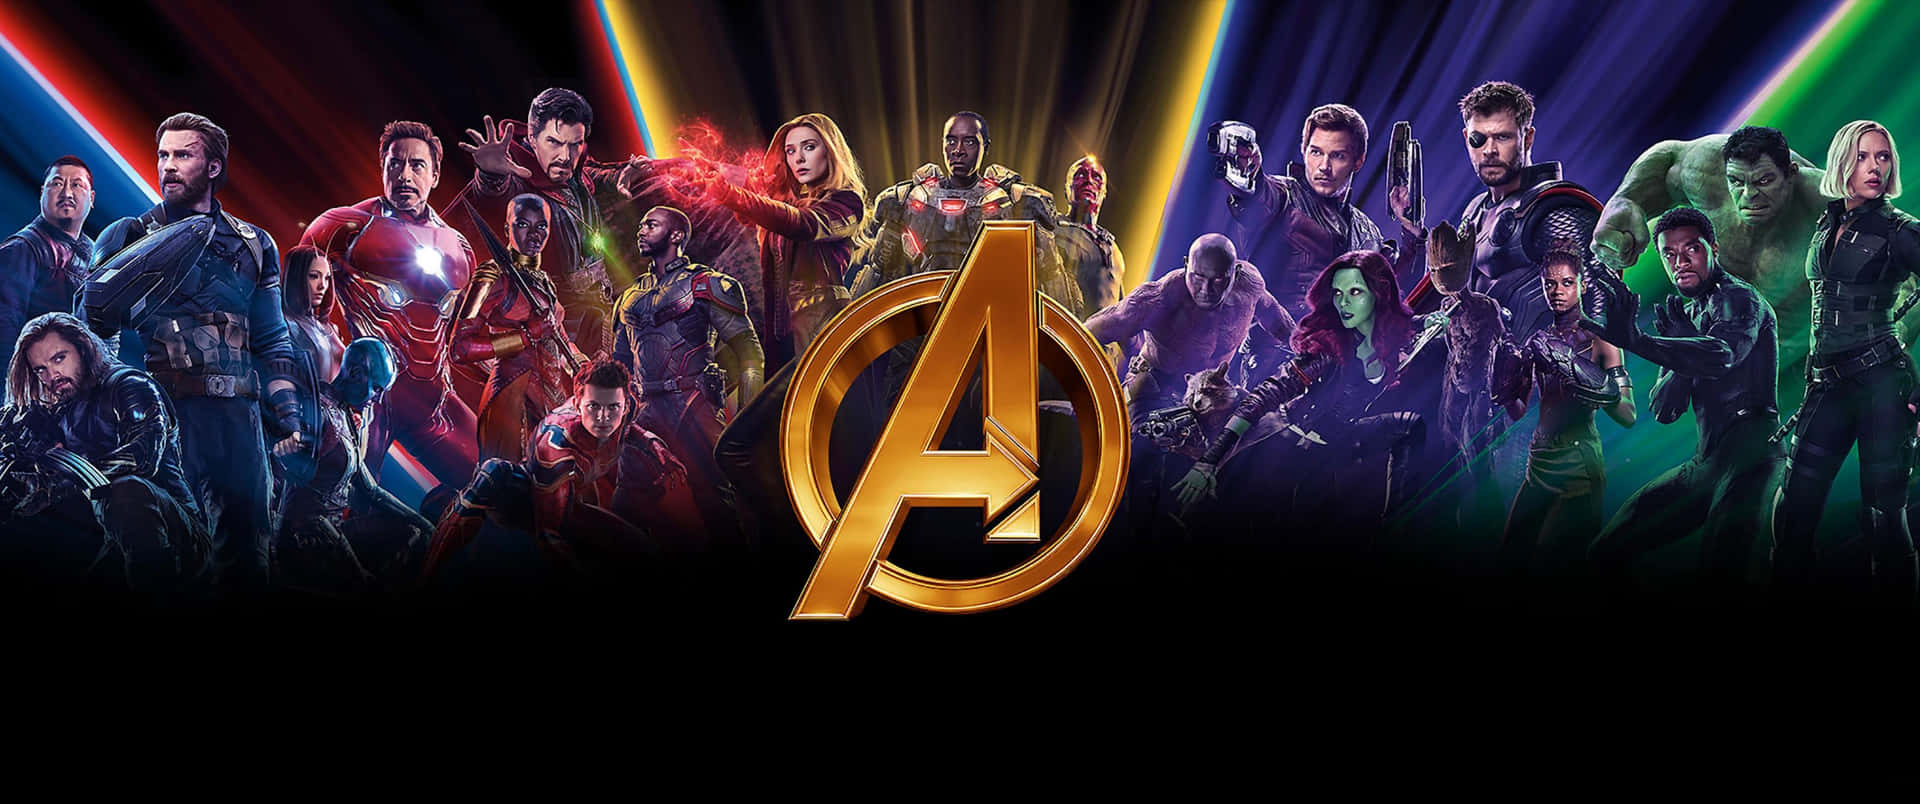 Marvel3440 X 1440 Avengers-logo Gegen Superhelden. Wallpaper